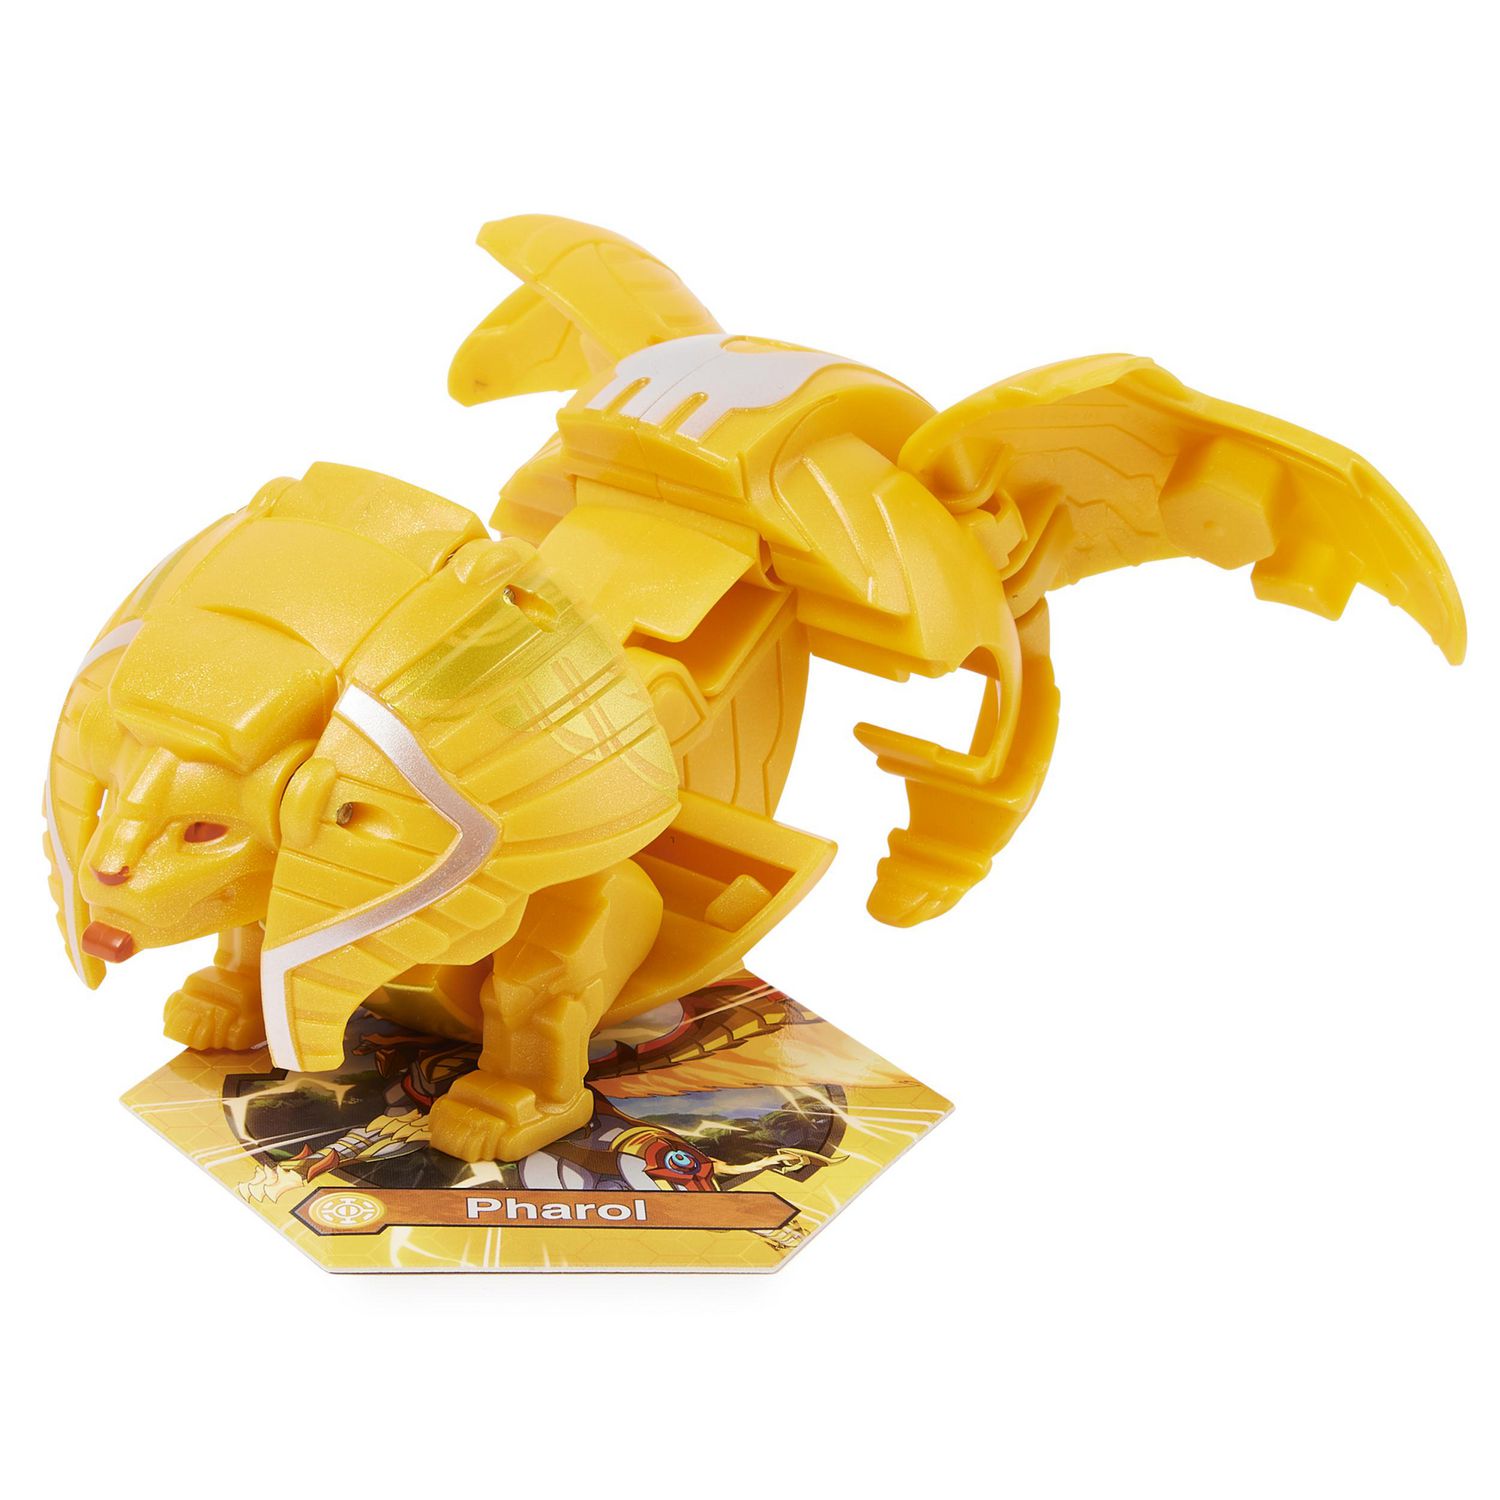 Buy Bakugan Gold King Cubbo Deka Pack Jumbo Figure Ages 6+ Toy Card Bundle  Dragon - MyDeal